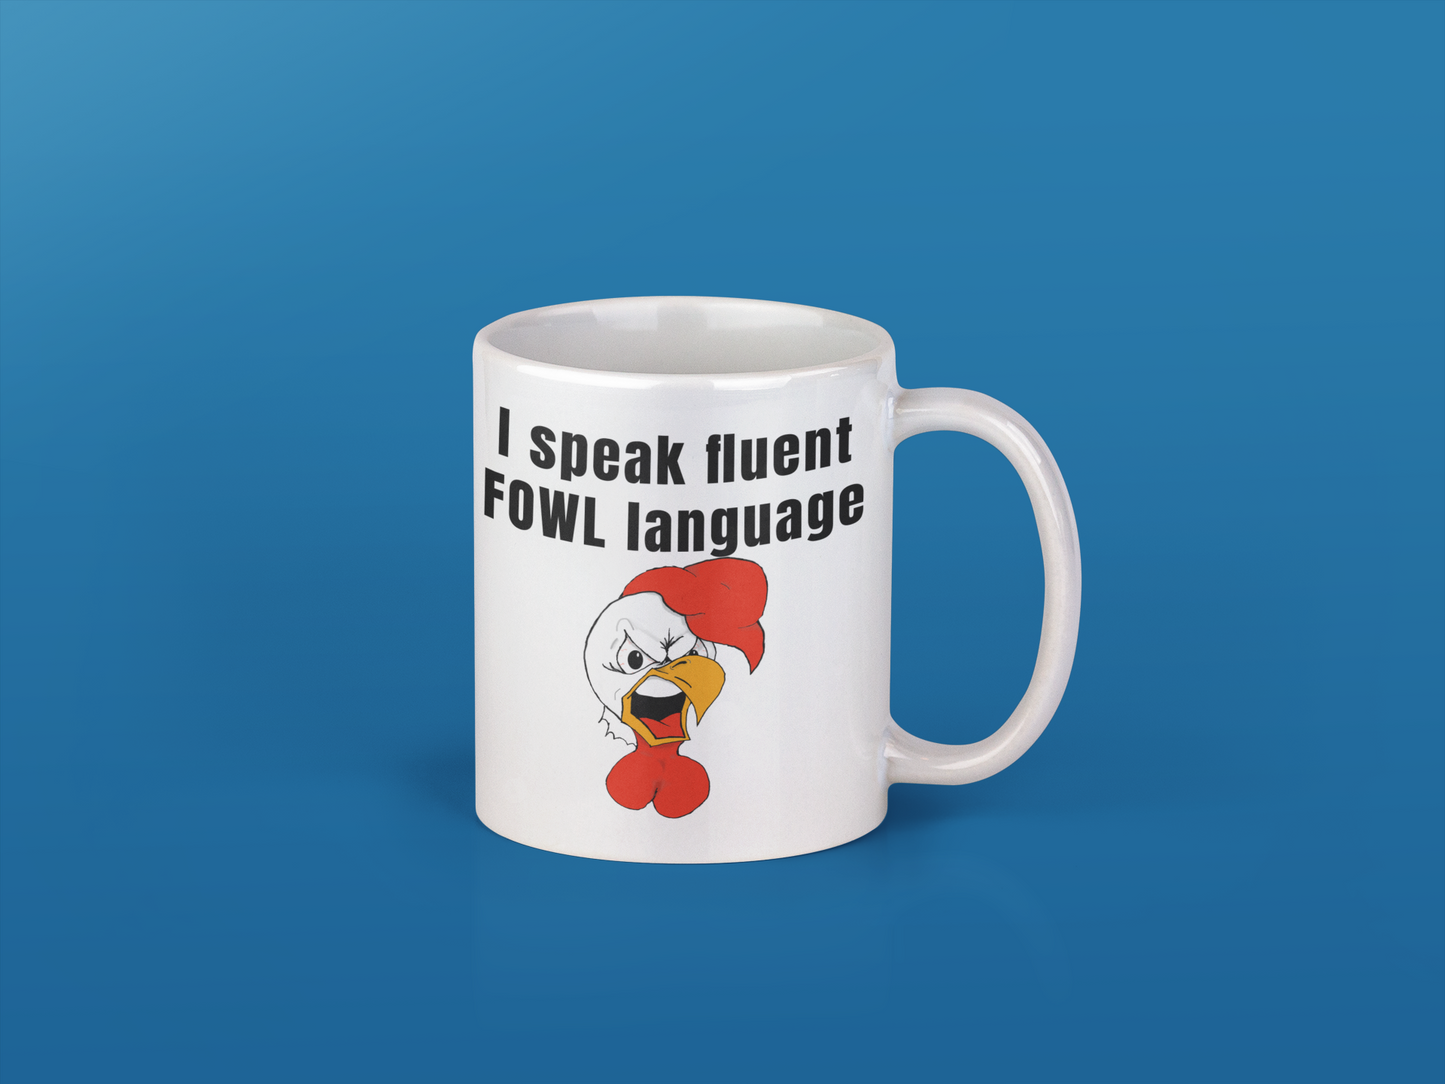 I speak fluent FOWL language - white glossy mug